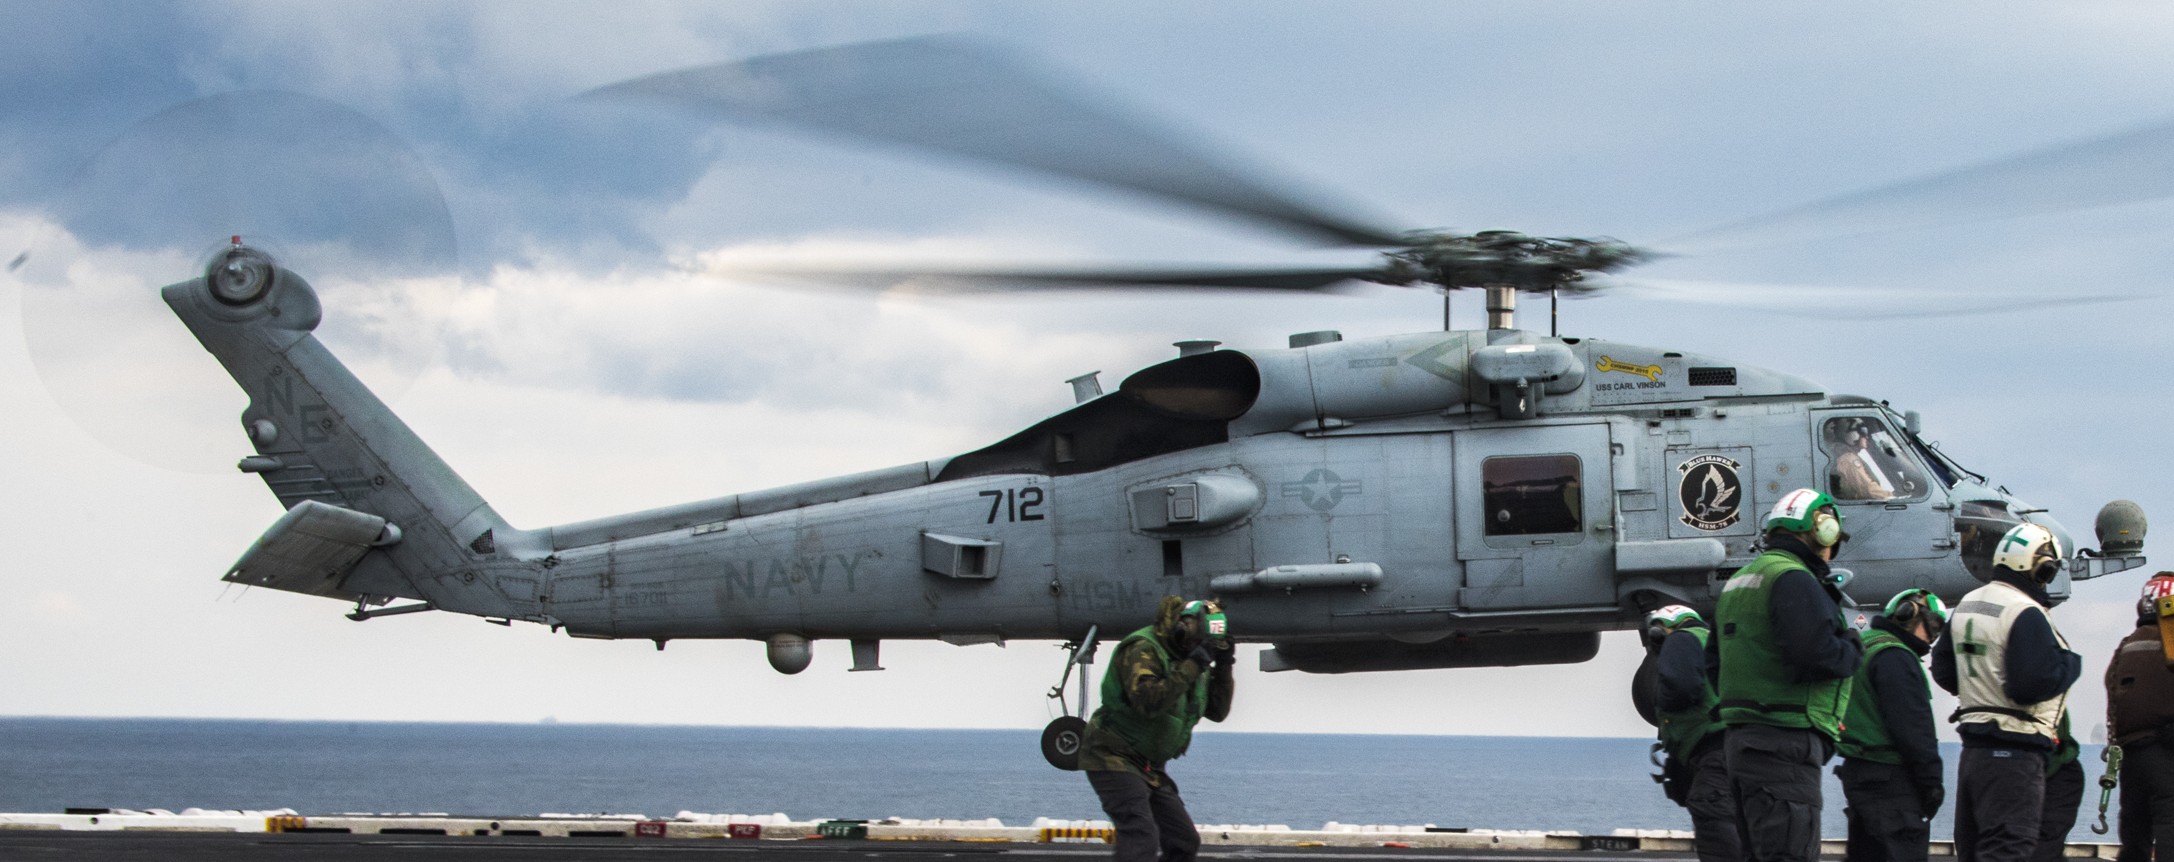 hsm-78 blue hawks helicopter maritime strike squadron mh-60r seahawk cvw-2 uss carl vinson cvn-70 09